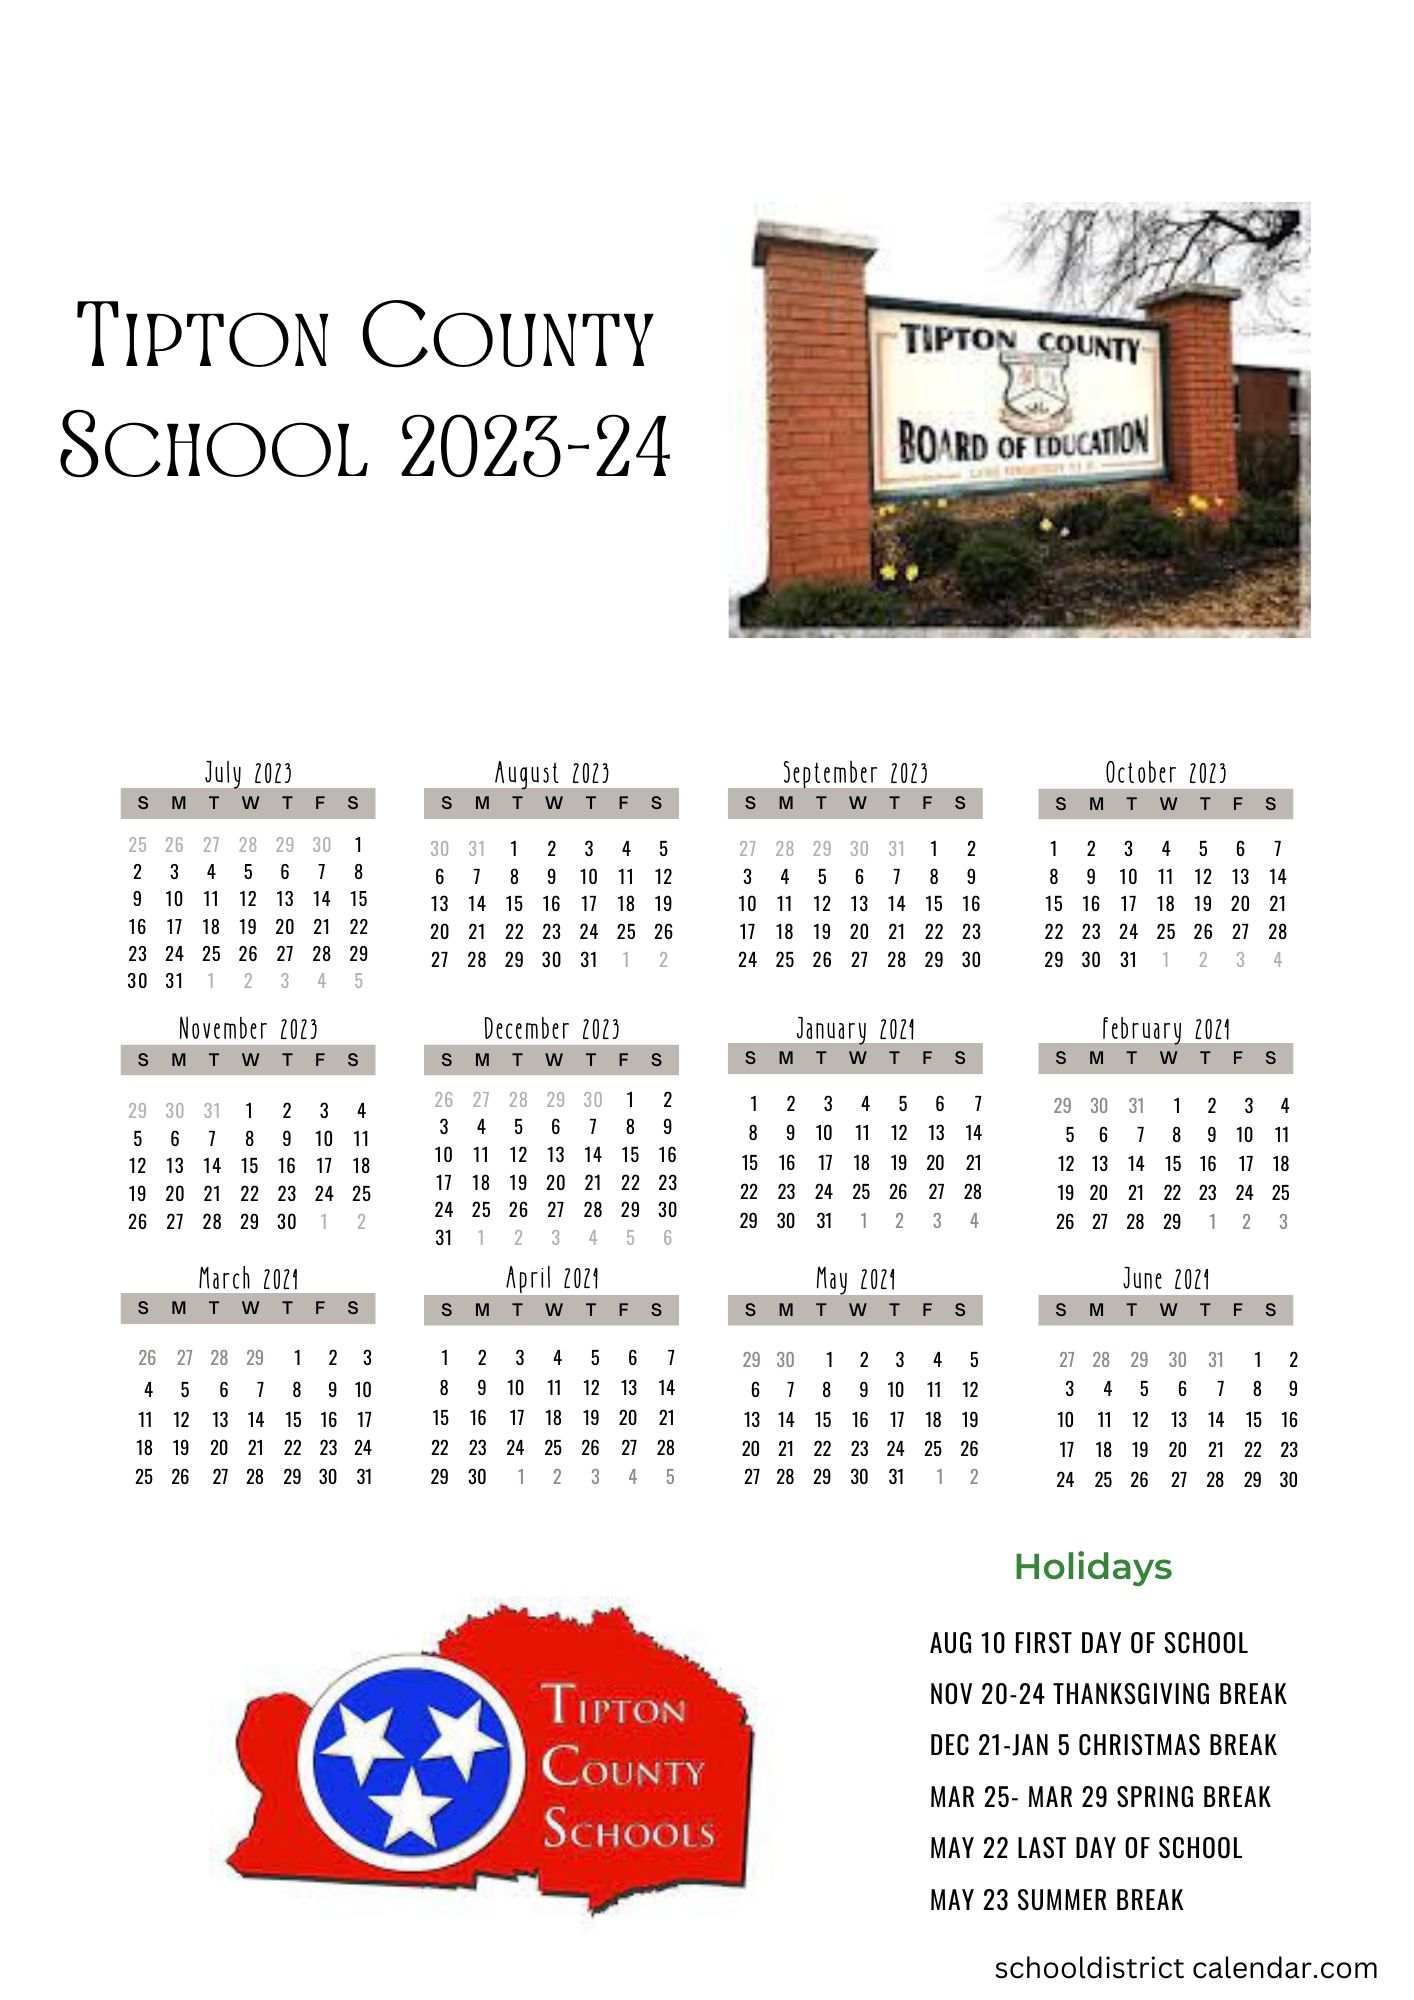 tipton-county-schools-calendar-with-holidays-2023-2024